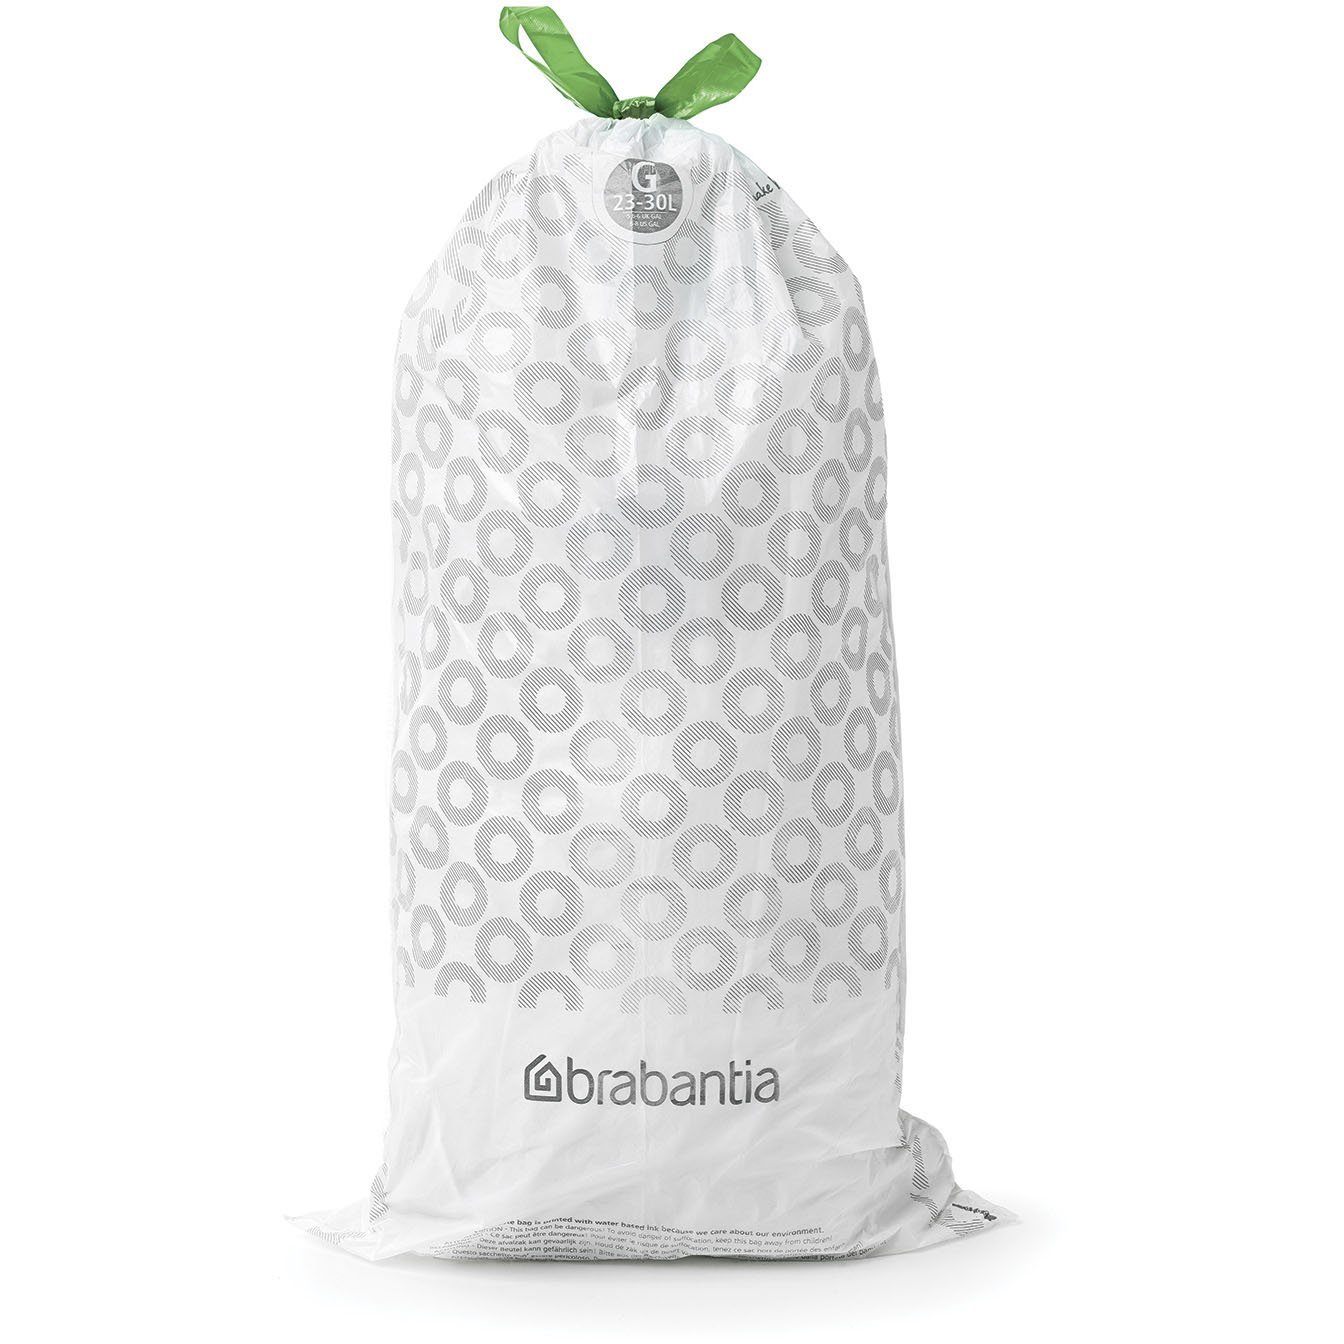 Brabantia PerfectFit affaldsposer Plastik hvid 23-30 l 20 ps